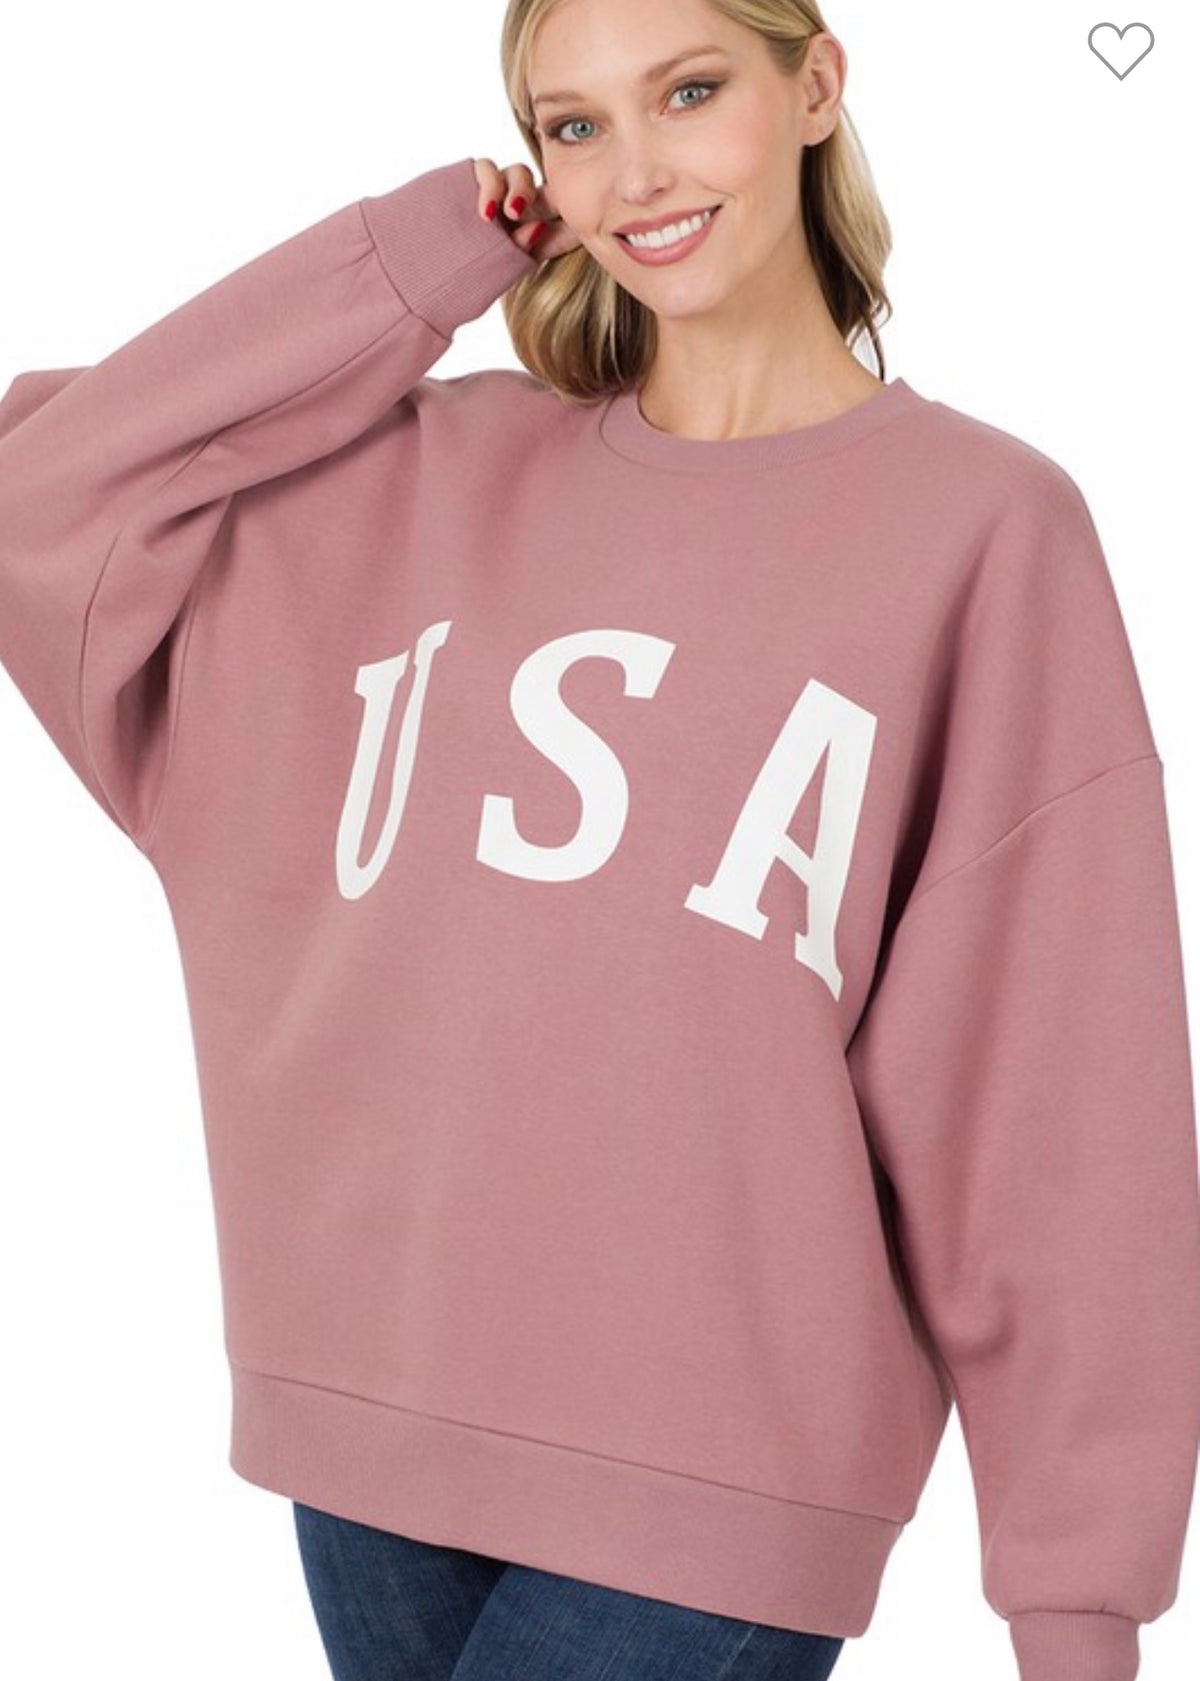 USA Sweatshirt in Mauve